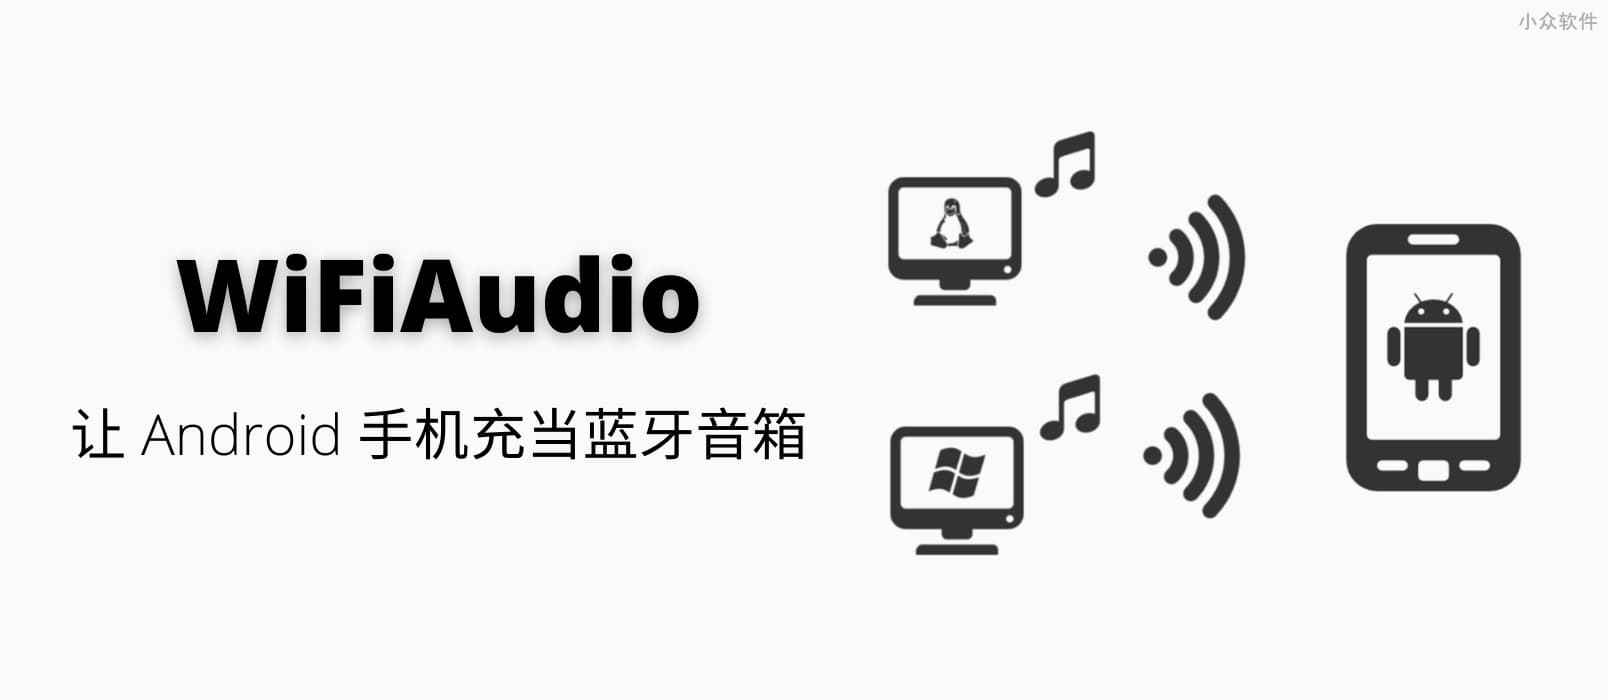 WiFiAudio – 让 Android 手机充当无线音箱，通过 Windows/Linux 播放音乐